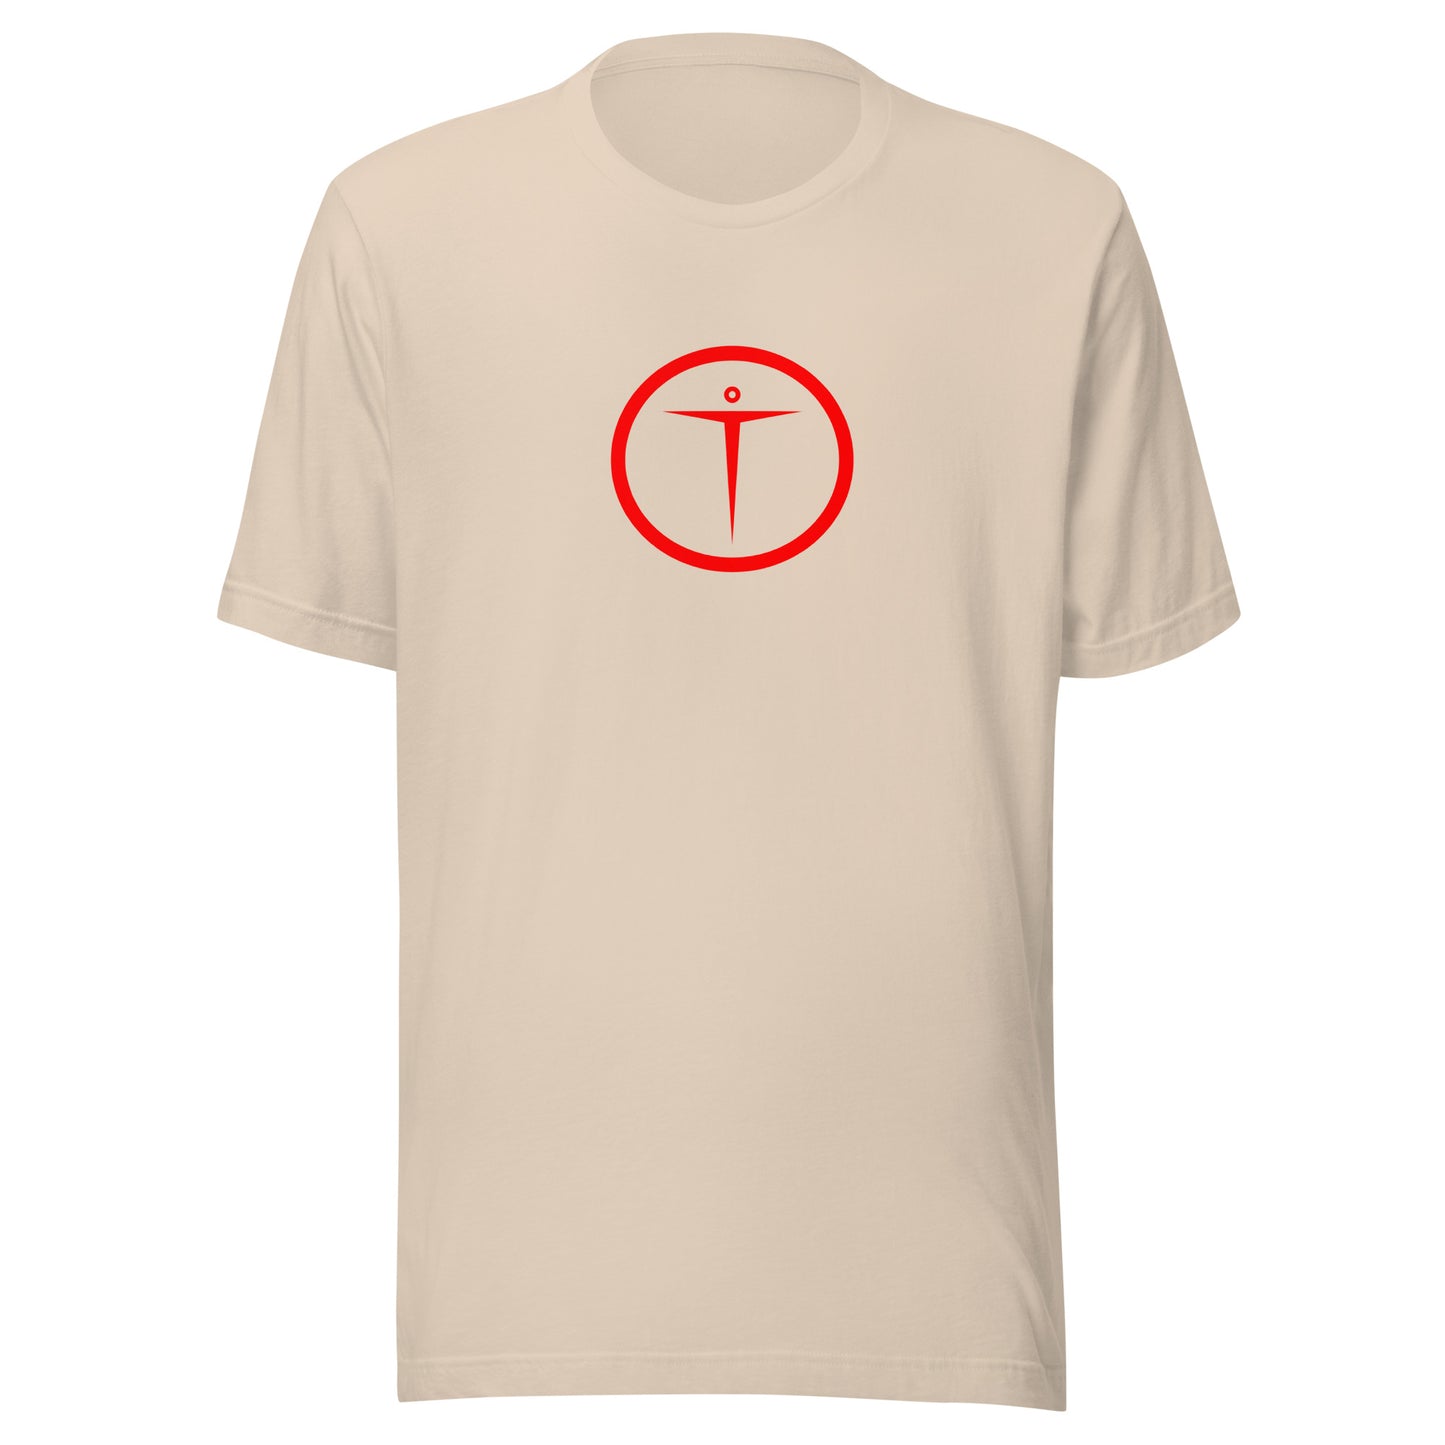 TORAYON Halo (R) Unisex T-shirt